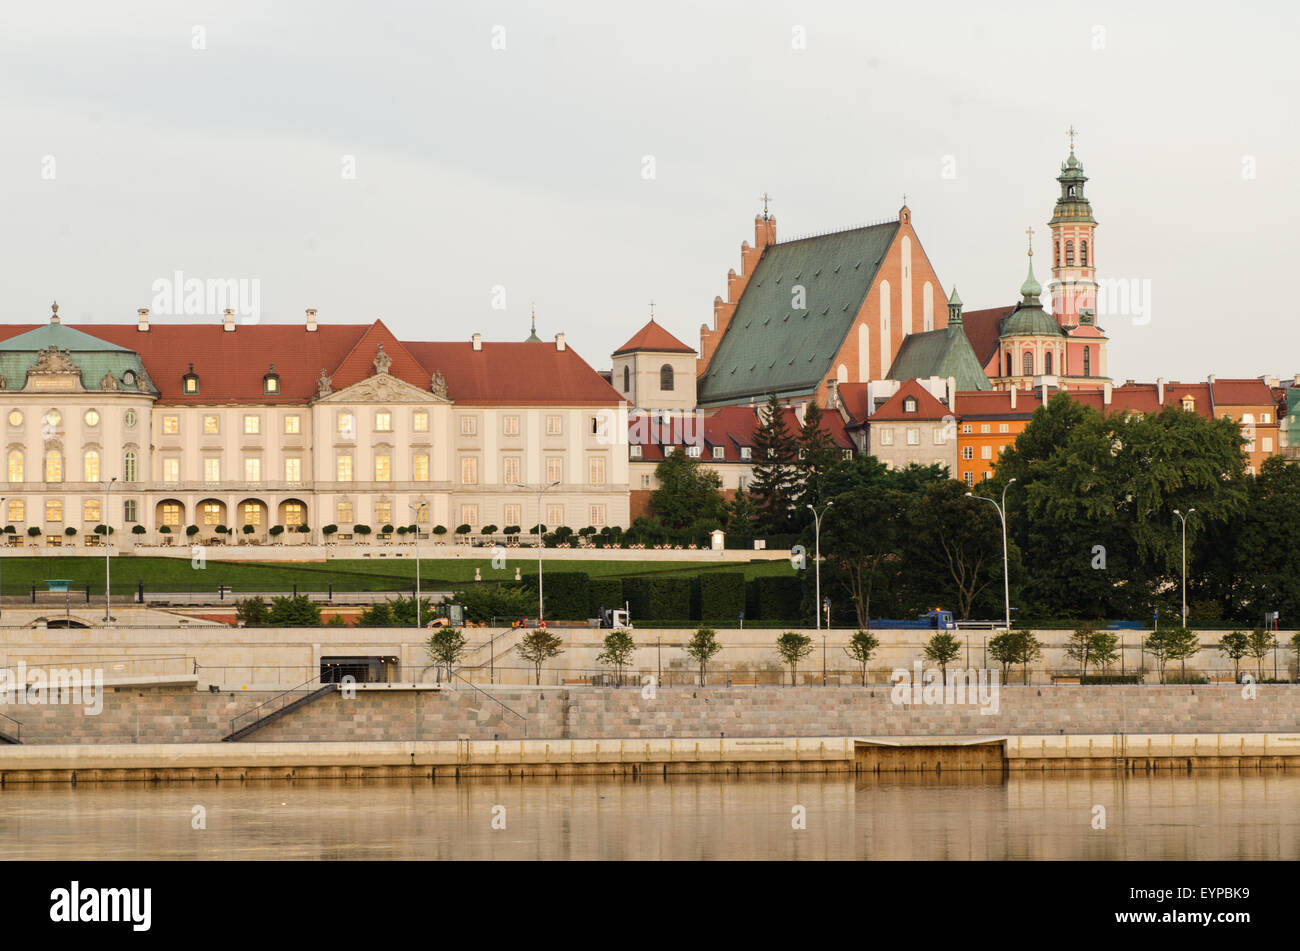 Warsaw Old Town view from Praga over Vistula River Stock Photo